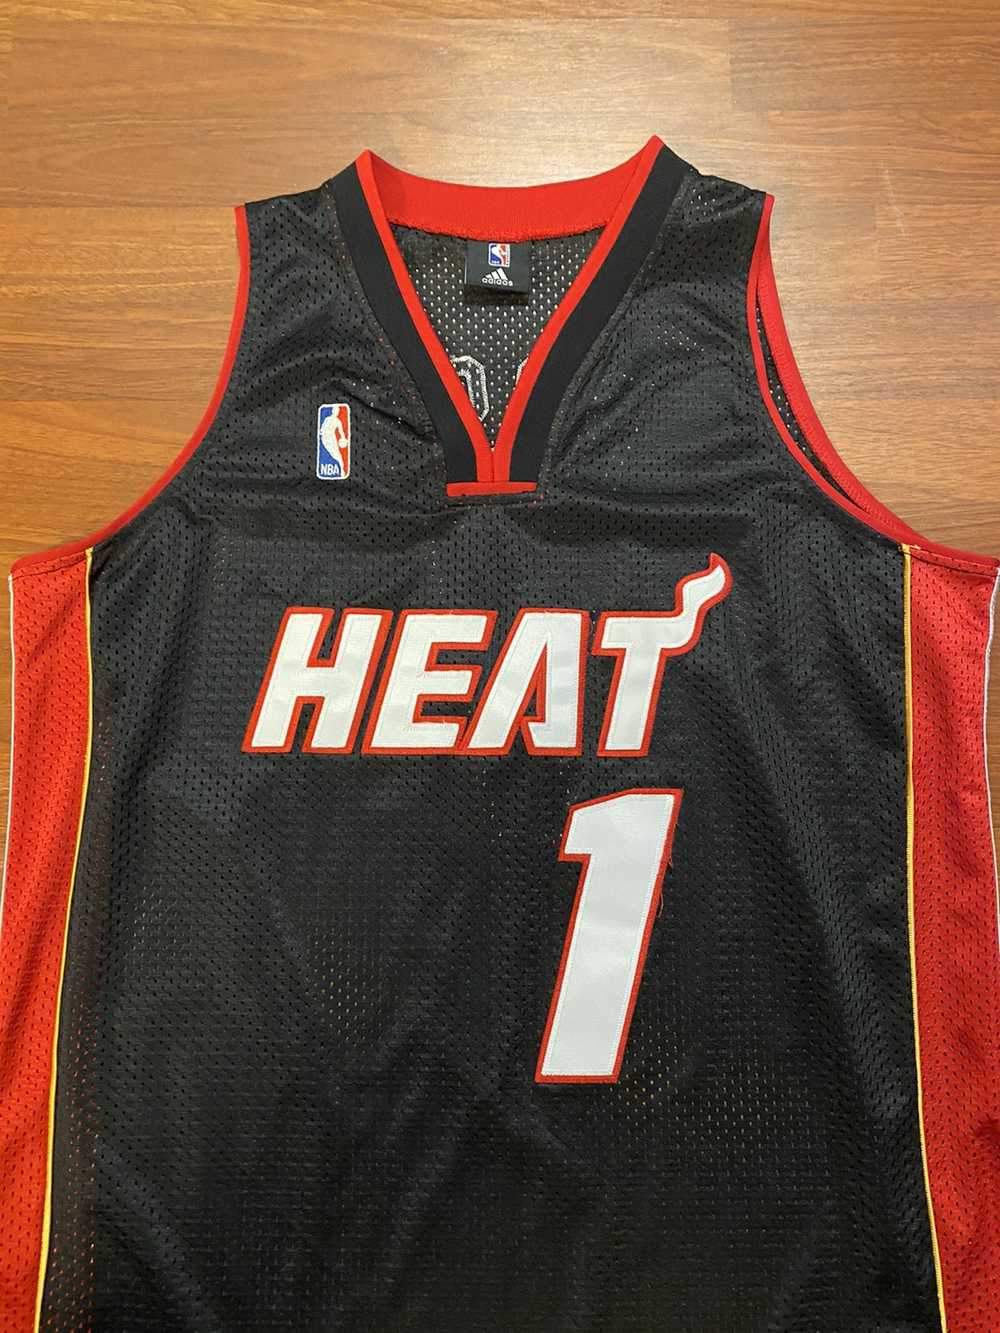 New Dwayne Wade Adidas Black Miami Heat Jersey Size 48 XL